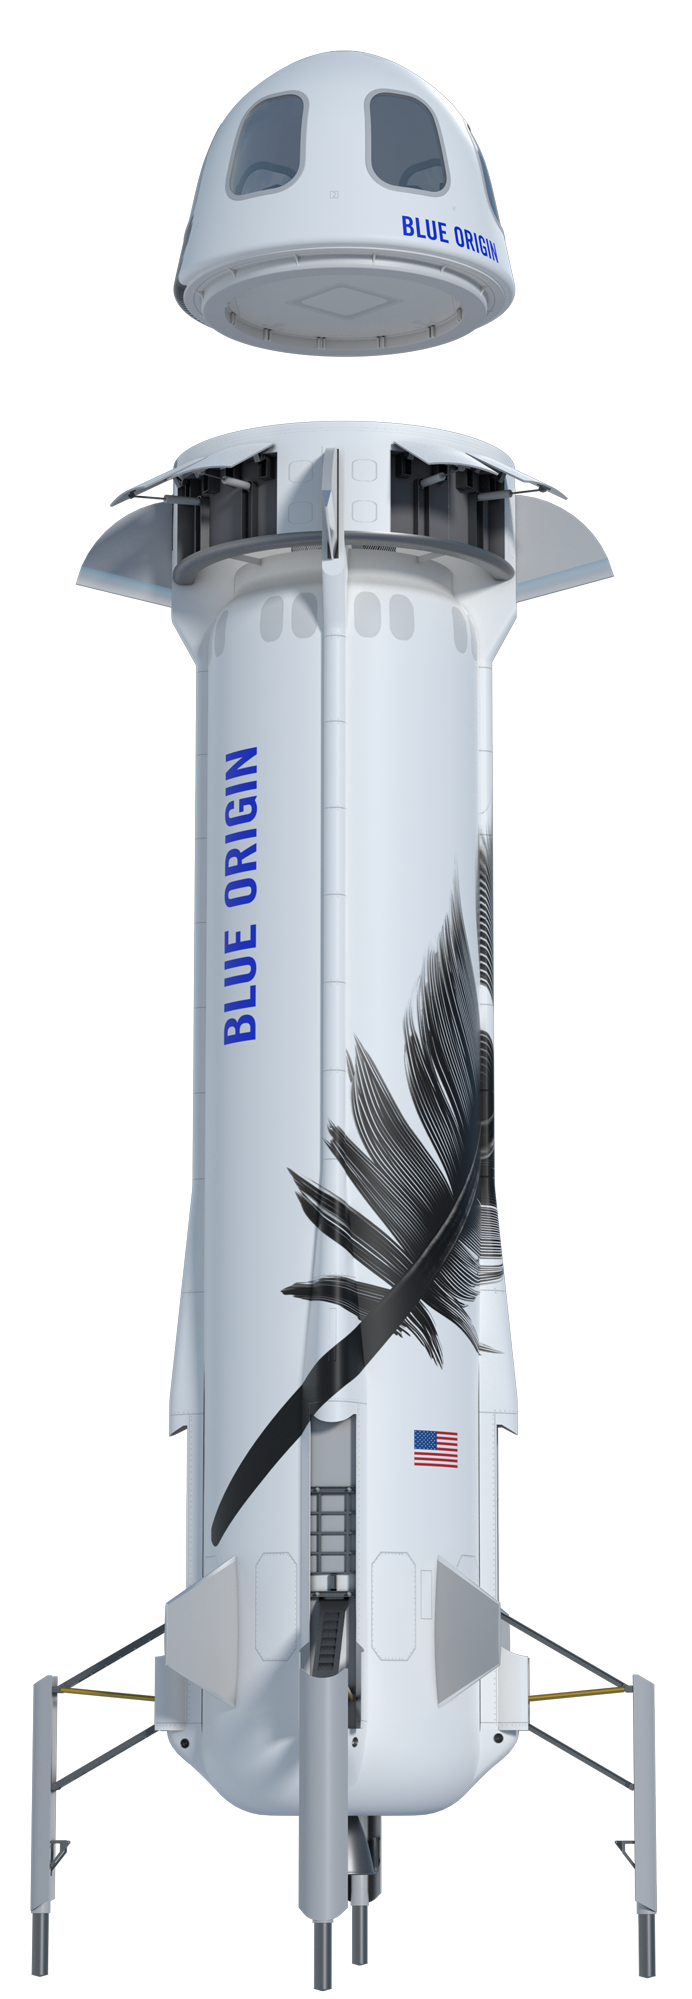 Bezos' Blue Origin loses lawsuit against NASA over SpaceX lunar lander